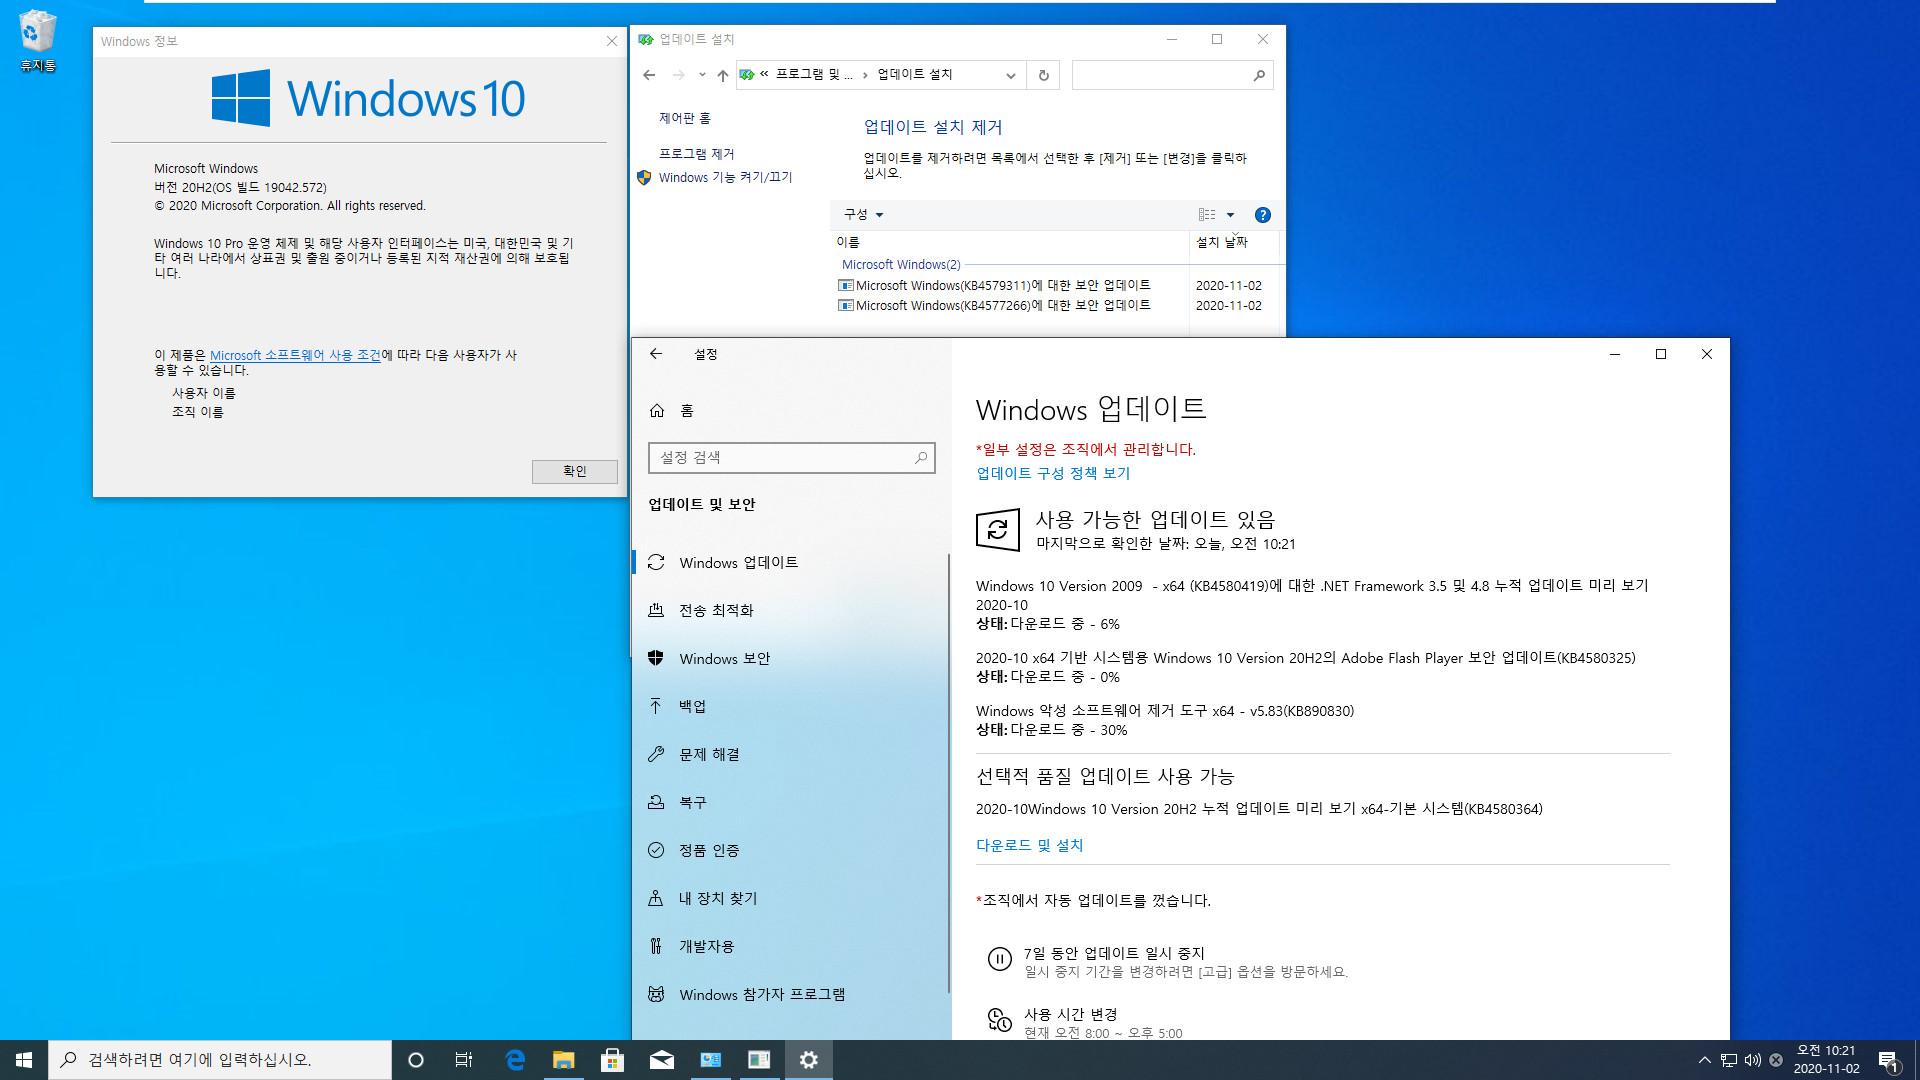 Windows 10 버전 20H2 기능 업데이트 KB4562830 폴더의 mum 파일들만 찾아서 설치하기.bat - 크로미엄 엣지 설치하지 않고 버전 20H2만 설치하기 테스트 - 뻘짓했네요 2020-11-02_102138.jpg